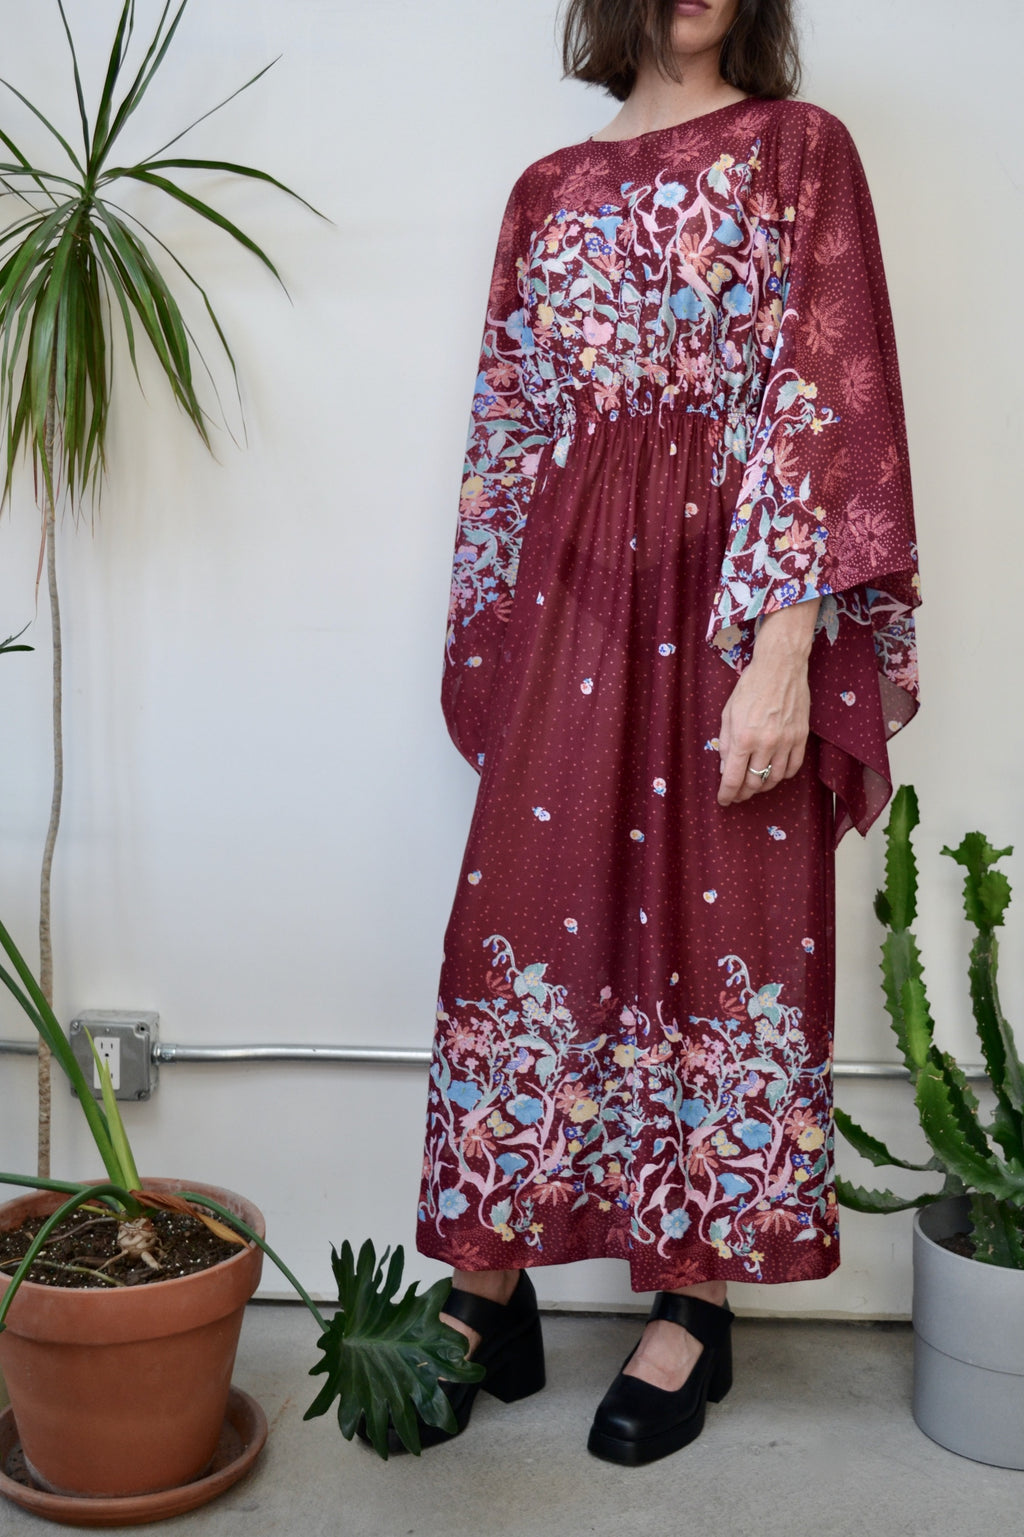 Floral Semi-Sheer Dress